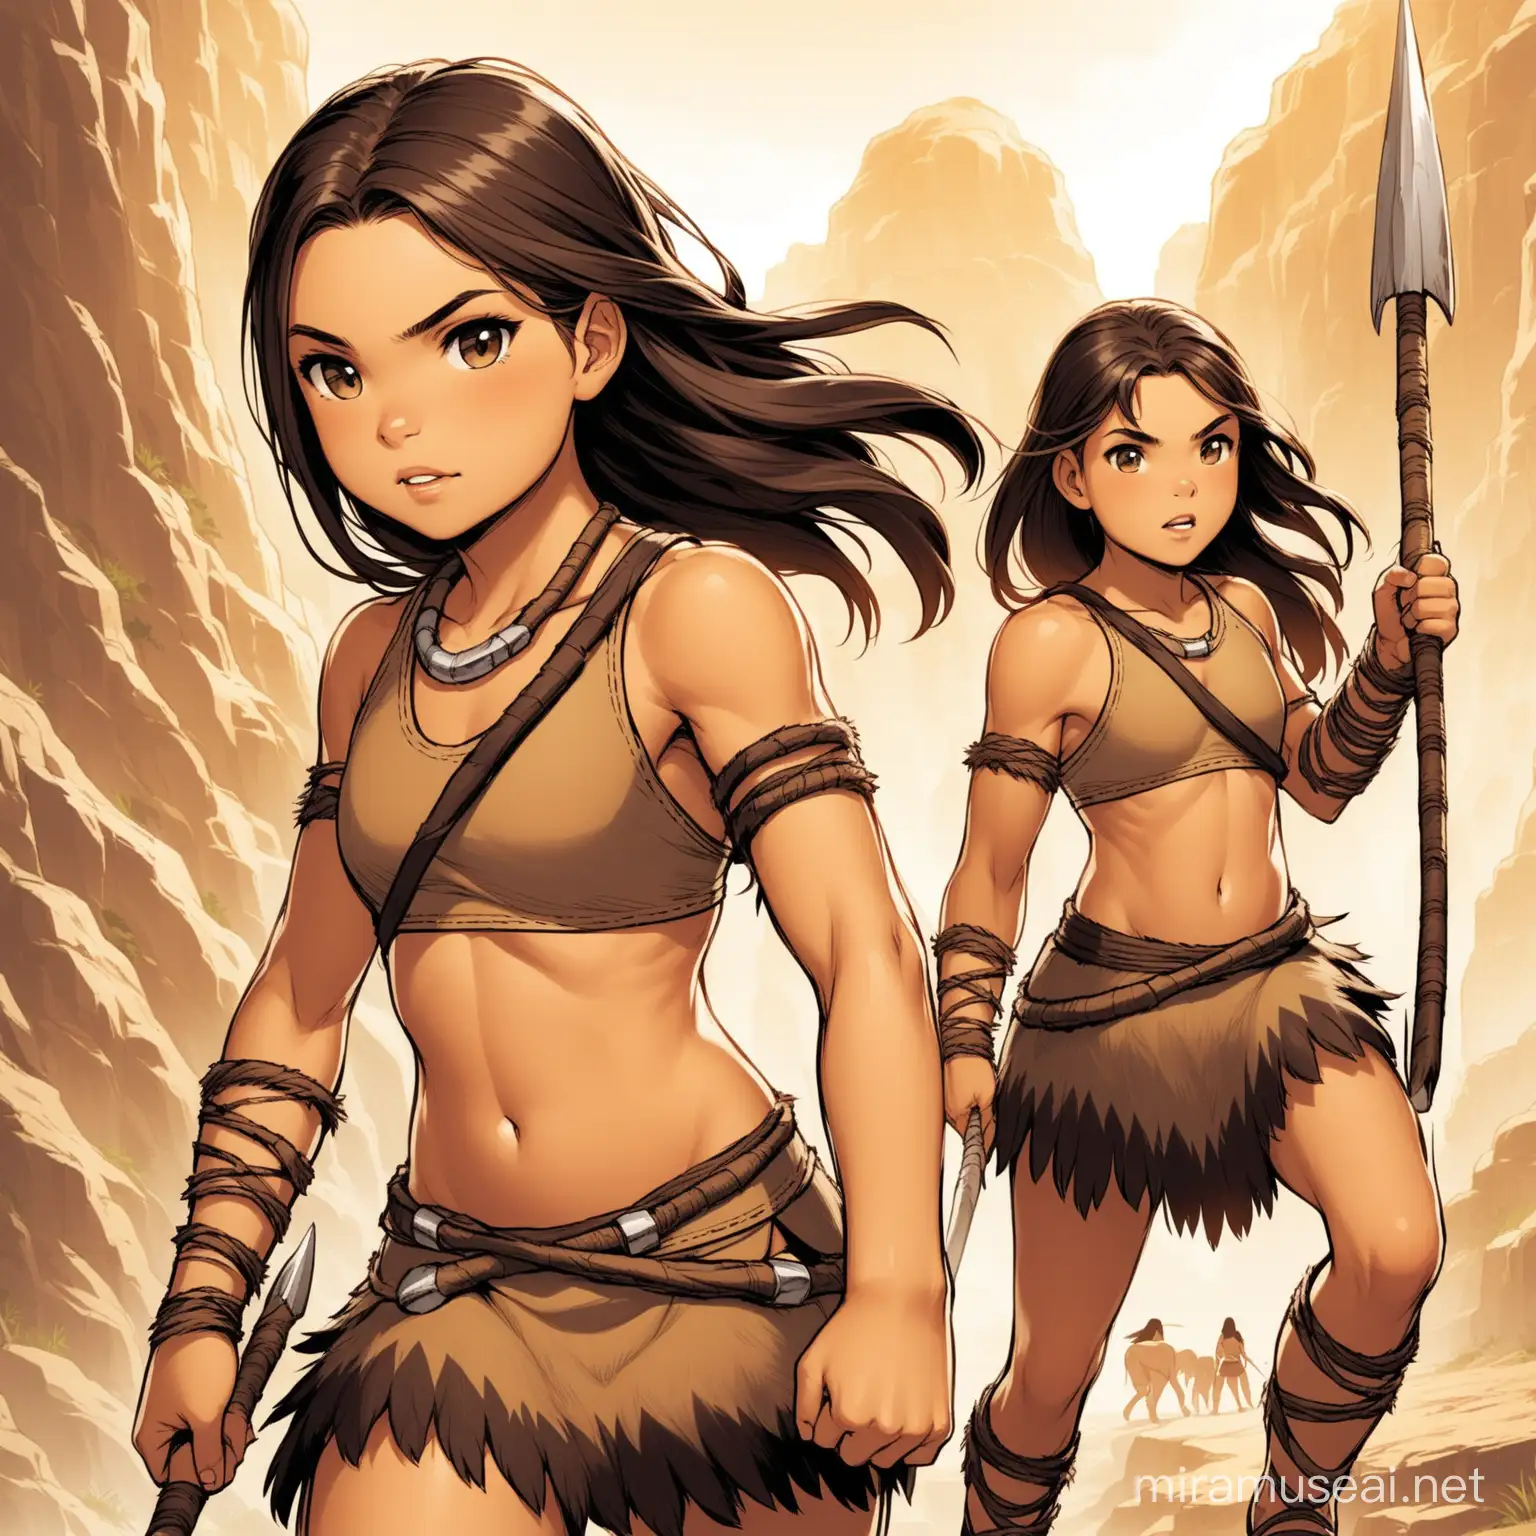 Paleolithic Teenage Warrior Girls Hunting in the Savannah